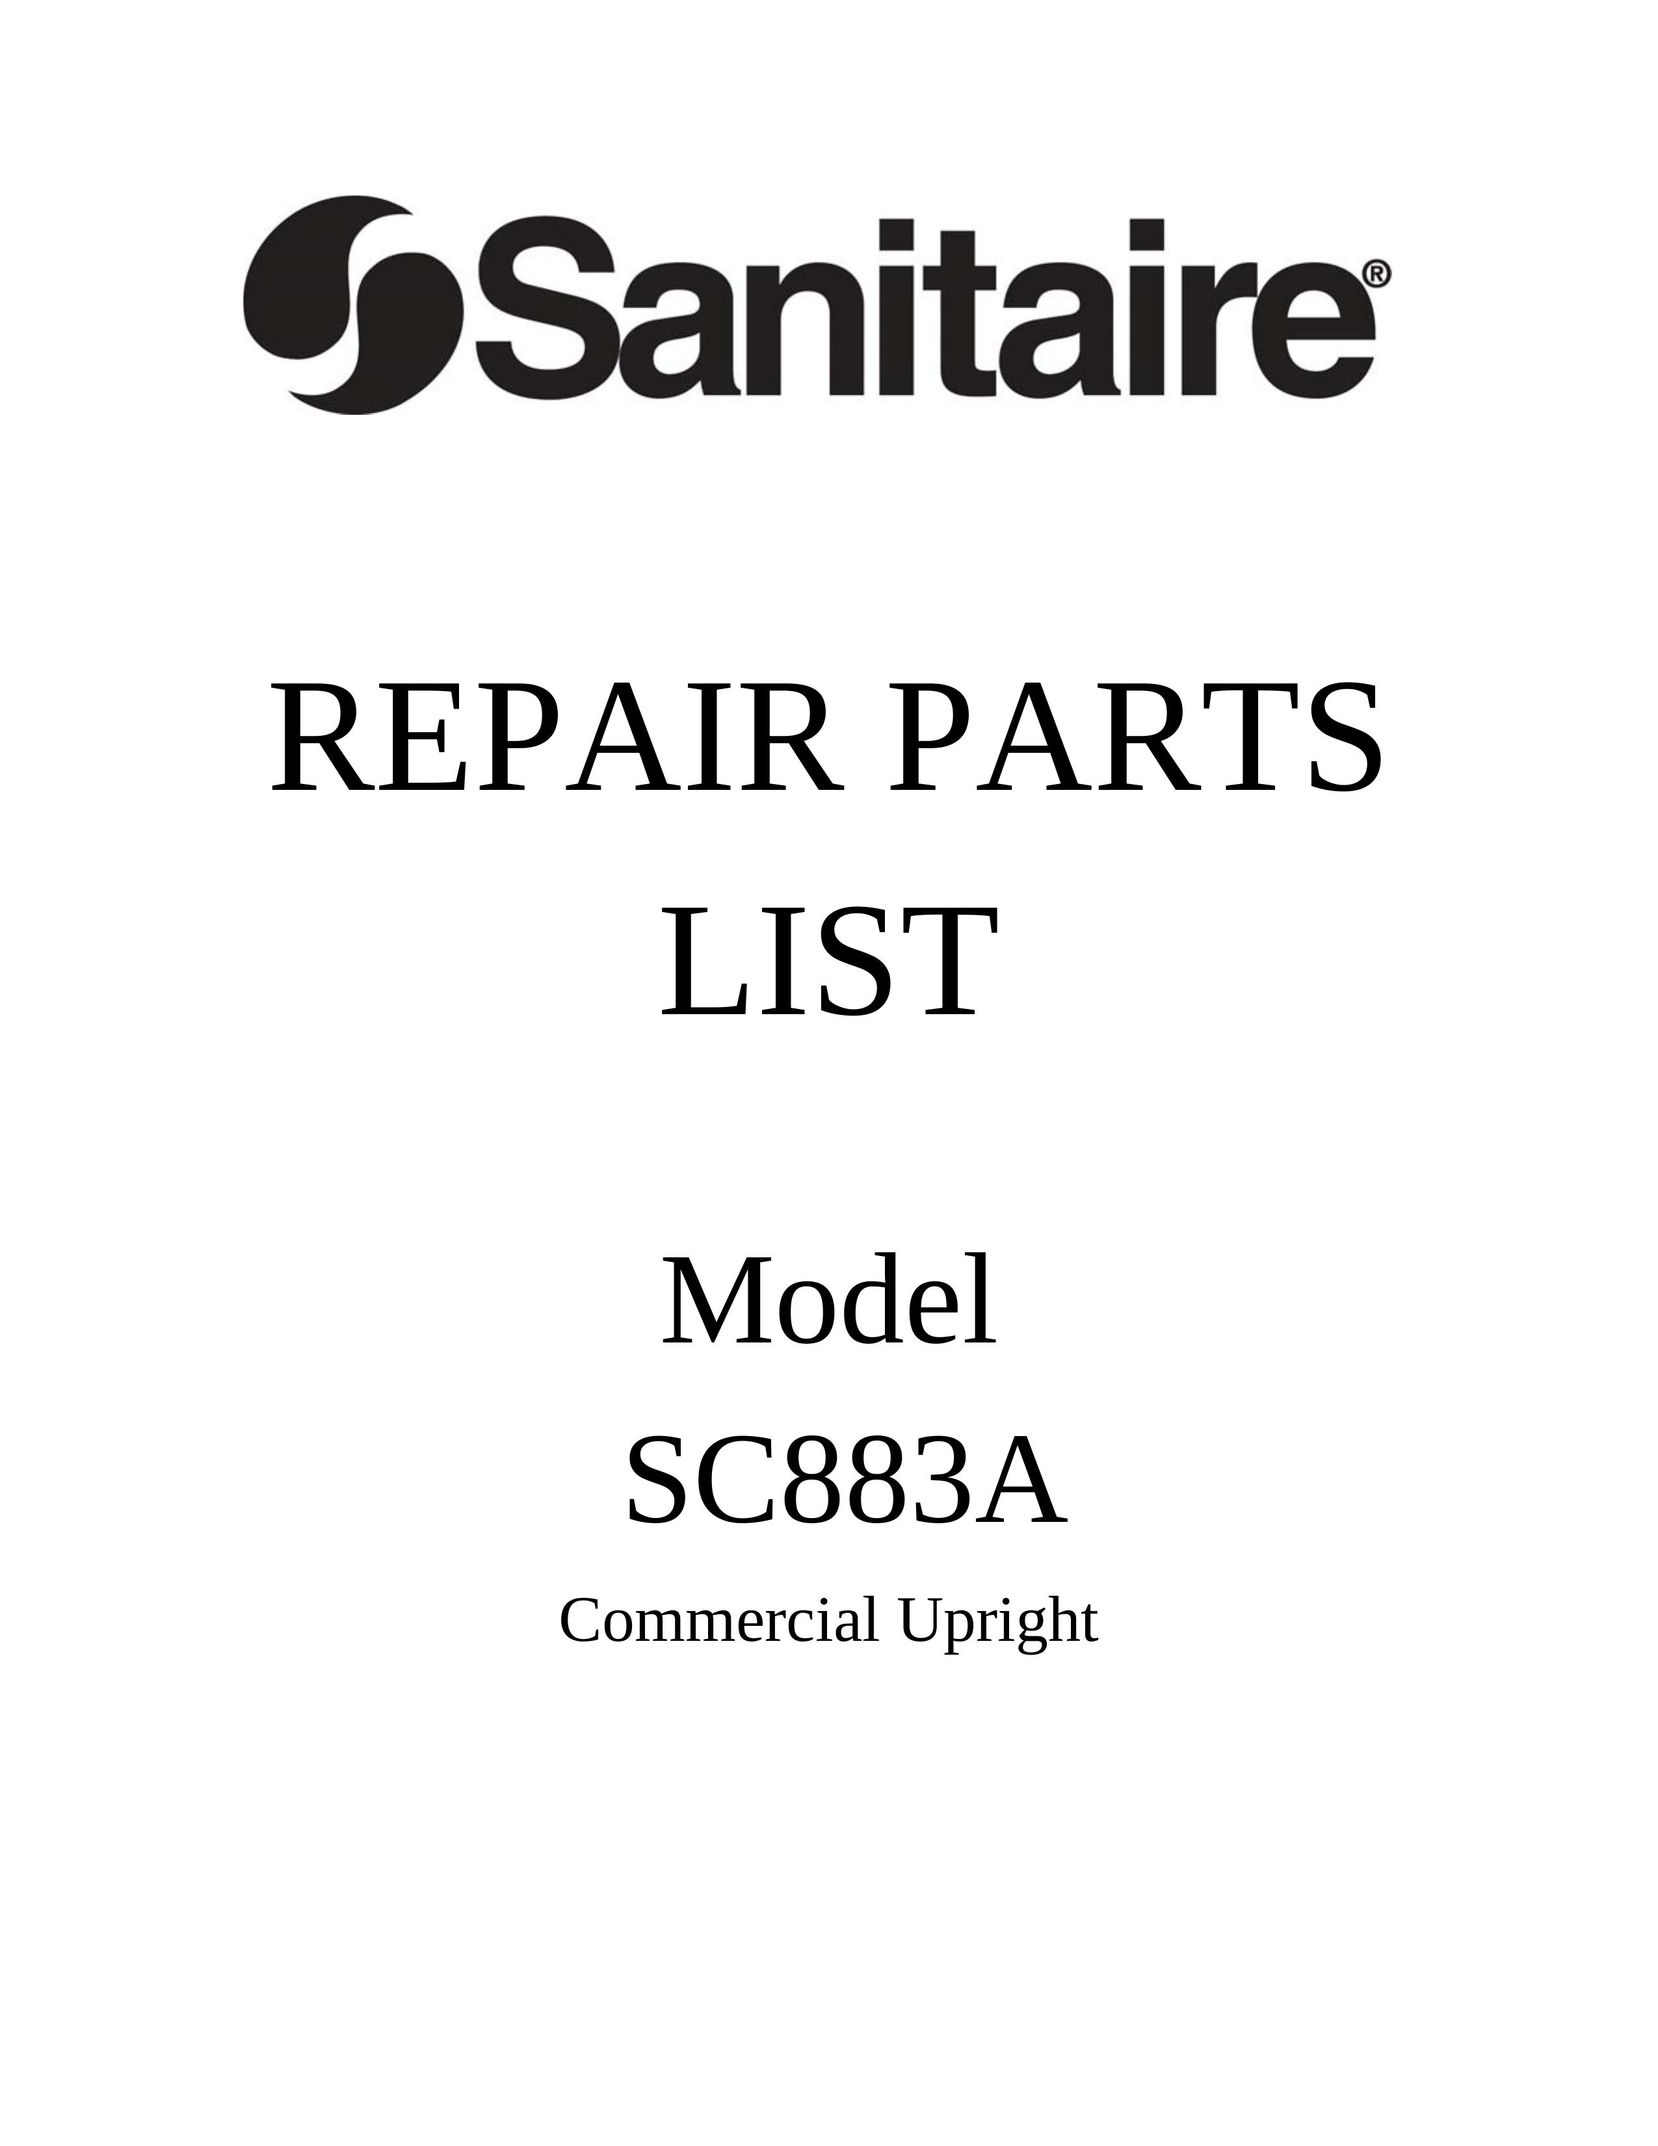 Sanitaire SC883A Vacuum Cleaner User Manual